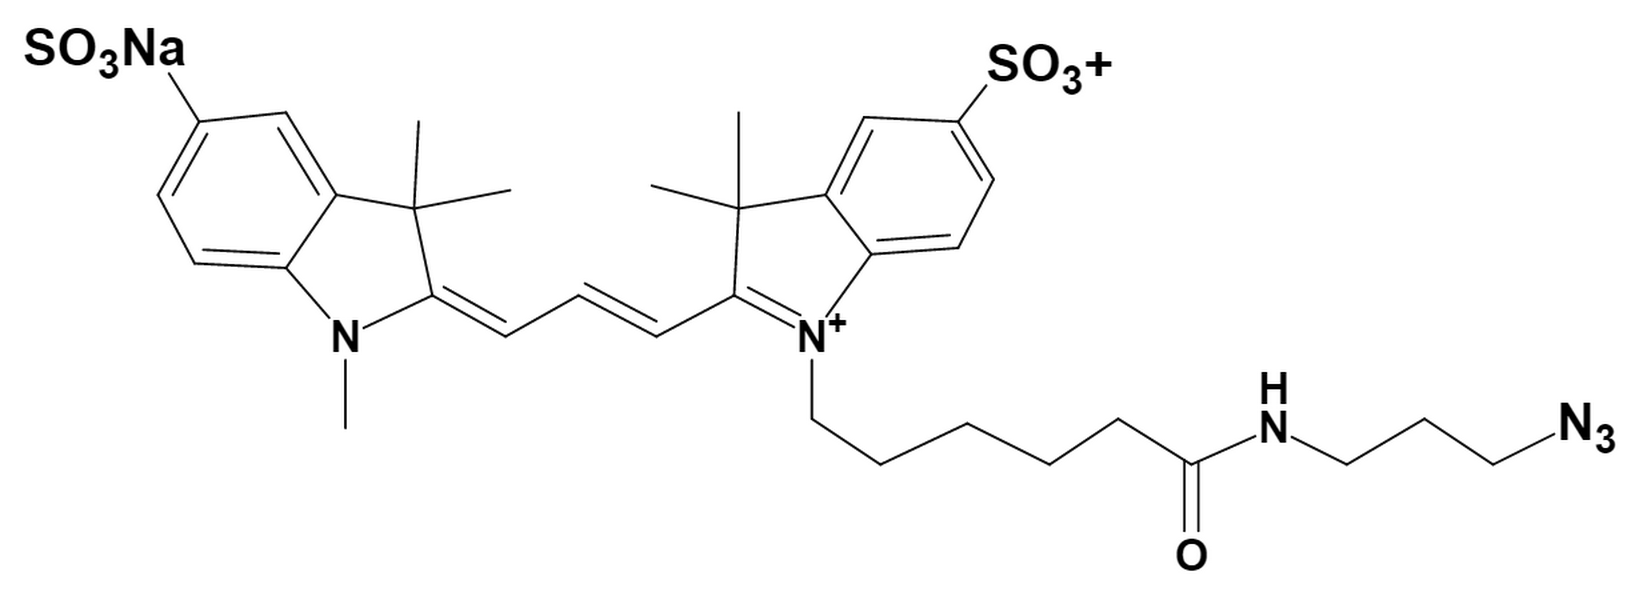 diSulfo-Cy3 azide